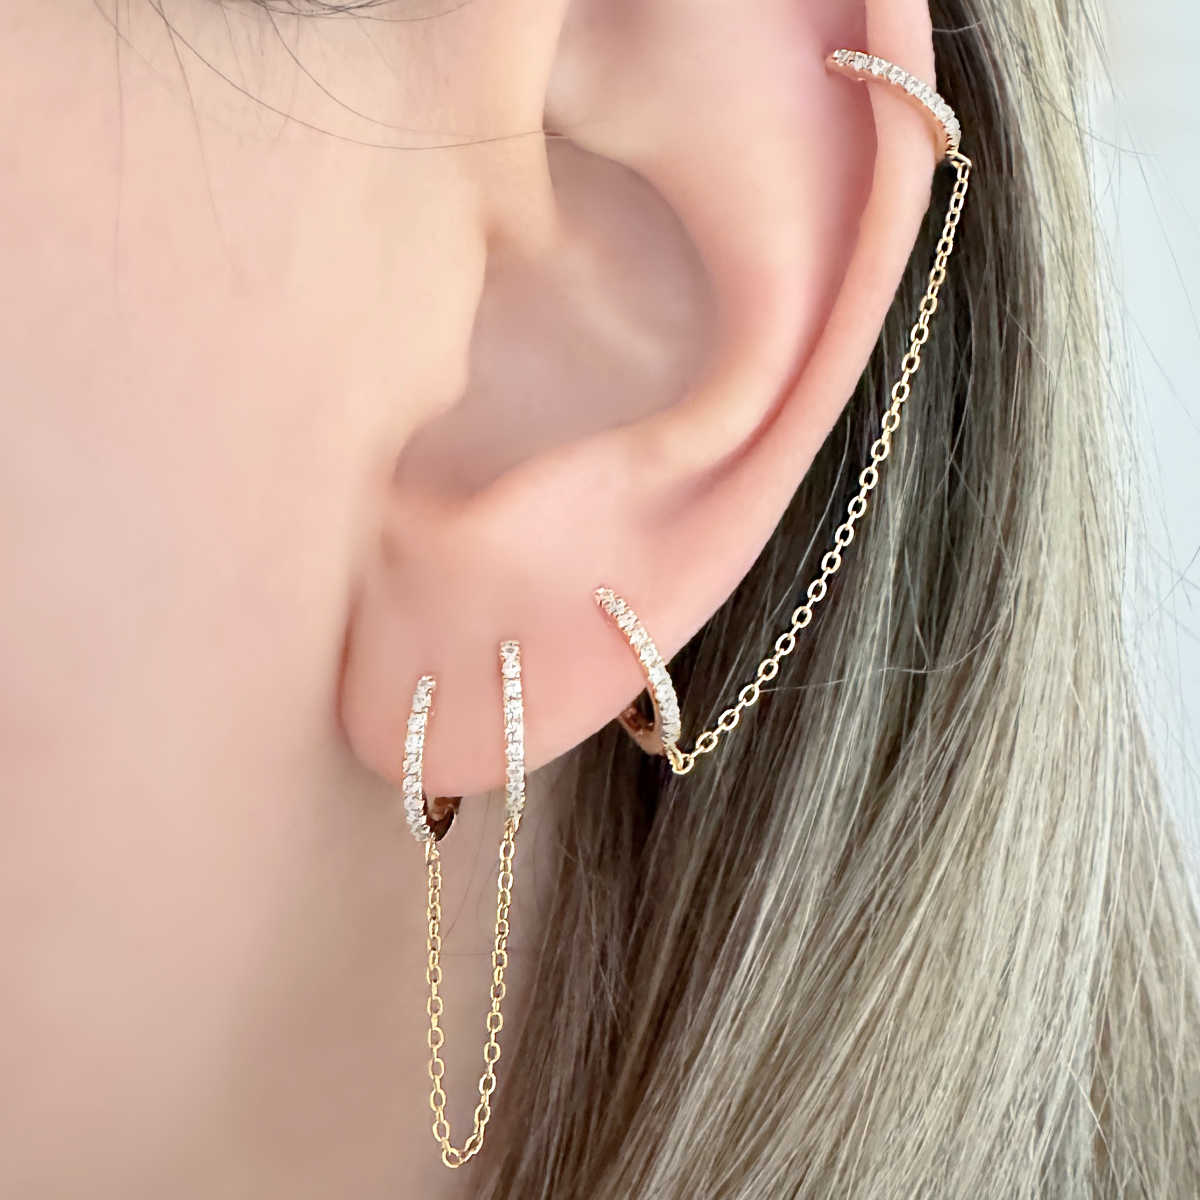 Chain Connected Hoops, Double Piercing Earrings, Helix to Lobe on Model